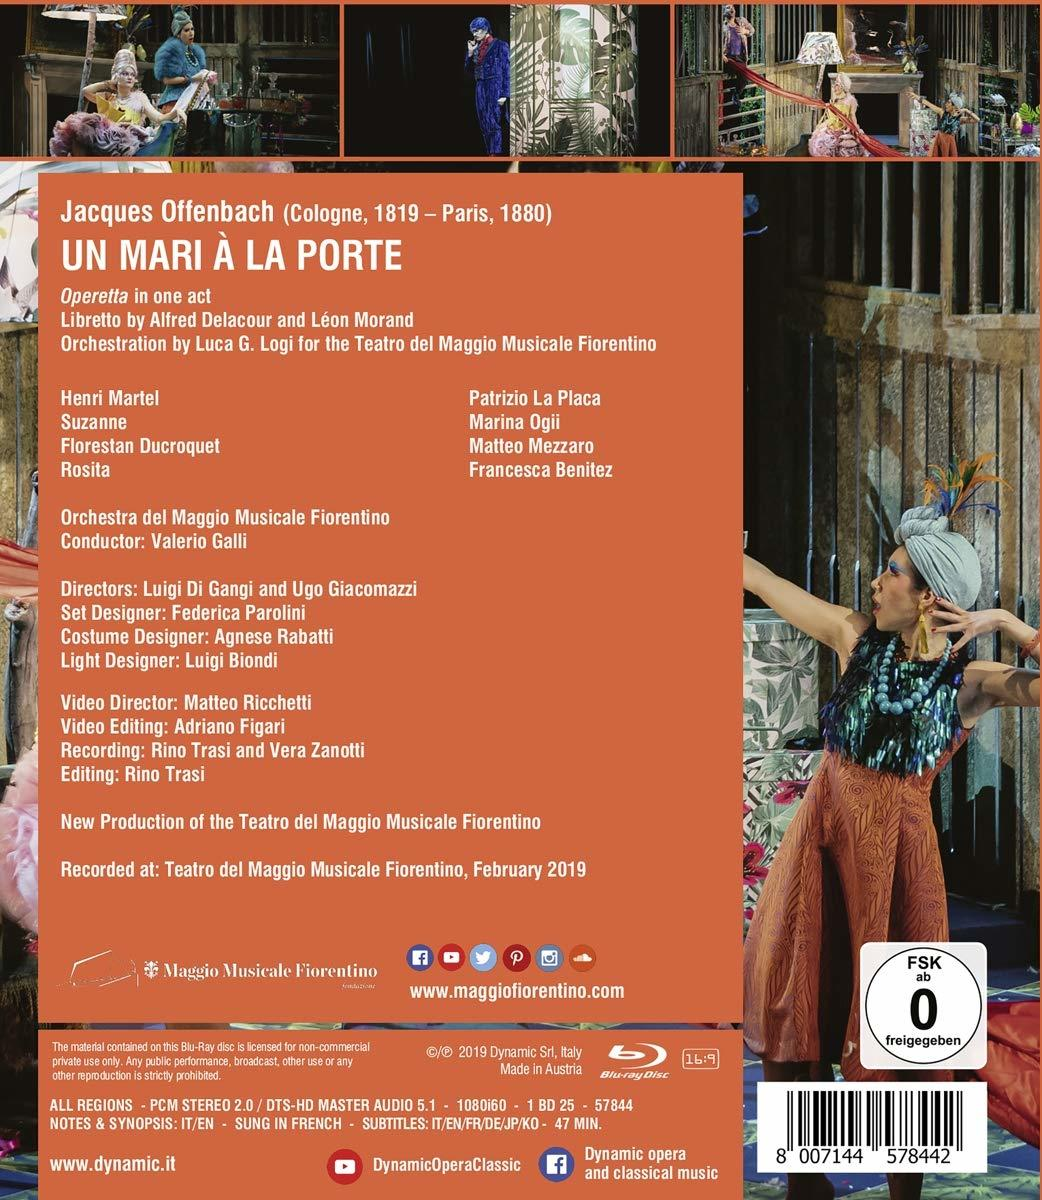 La porte - a (Blu-ray) la - Placa/Ogii/Mezzaro/Benitez/Galli/+ Un mari [Blu-ray]